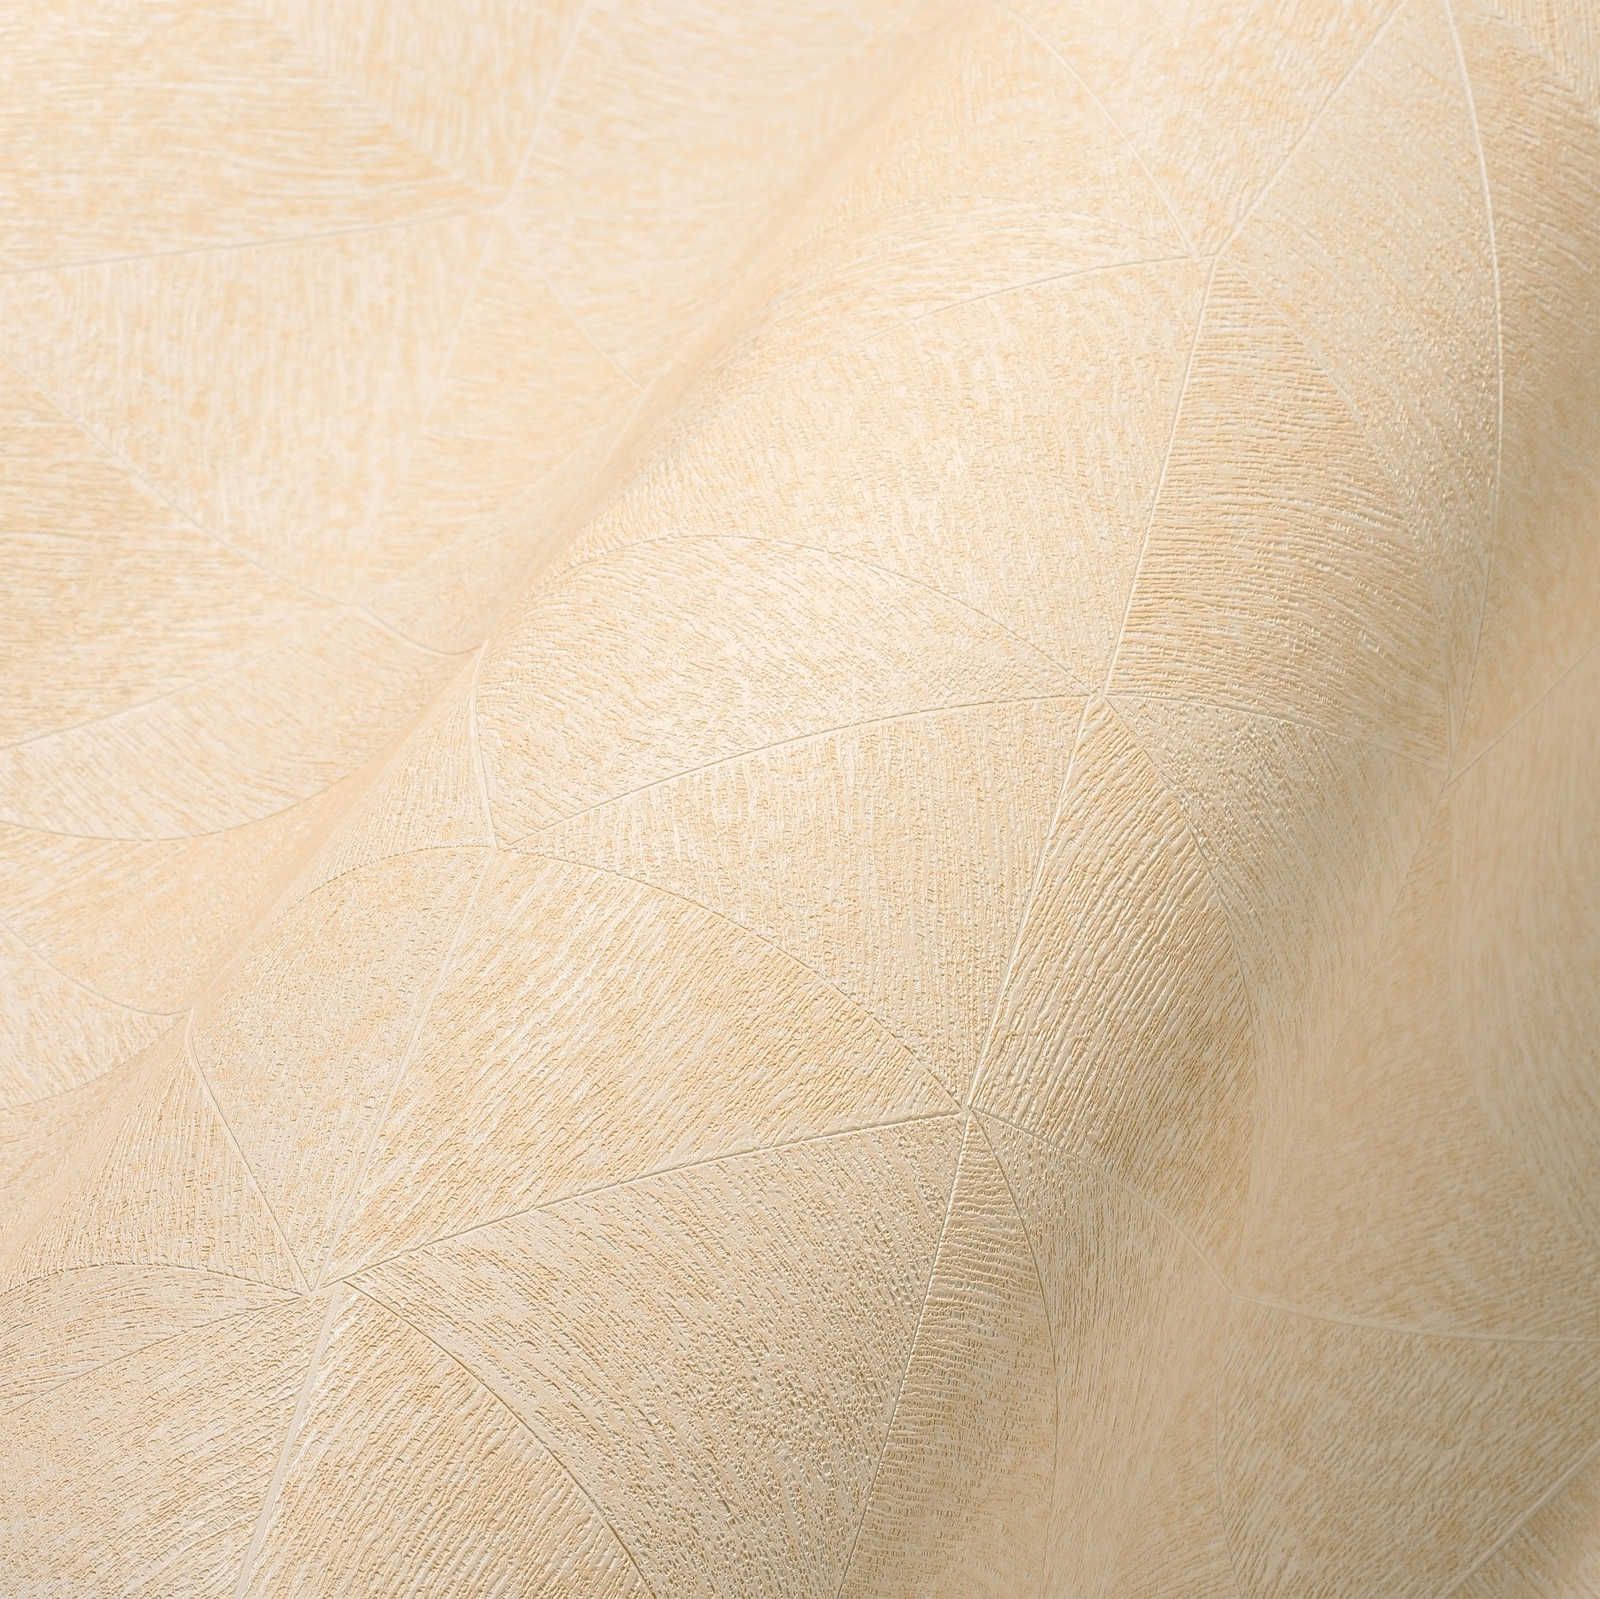             Papel pintado tejido-no tejido con motivos discretos - beige
        